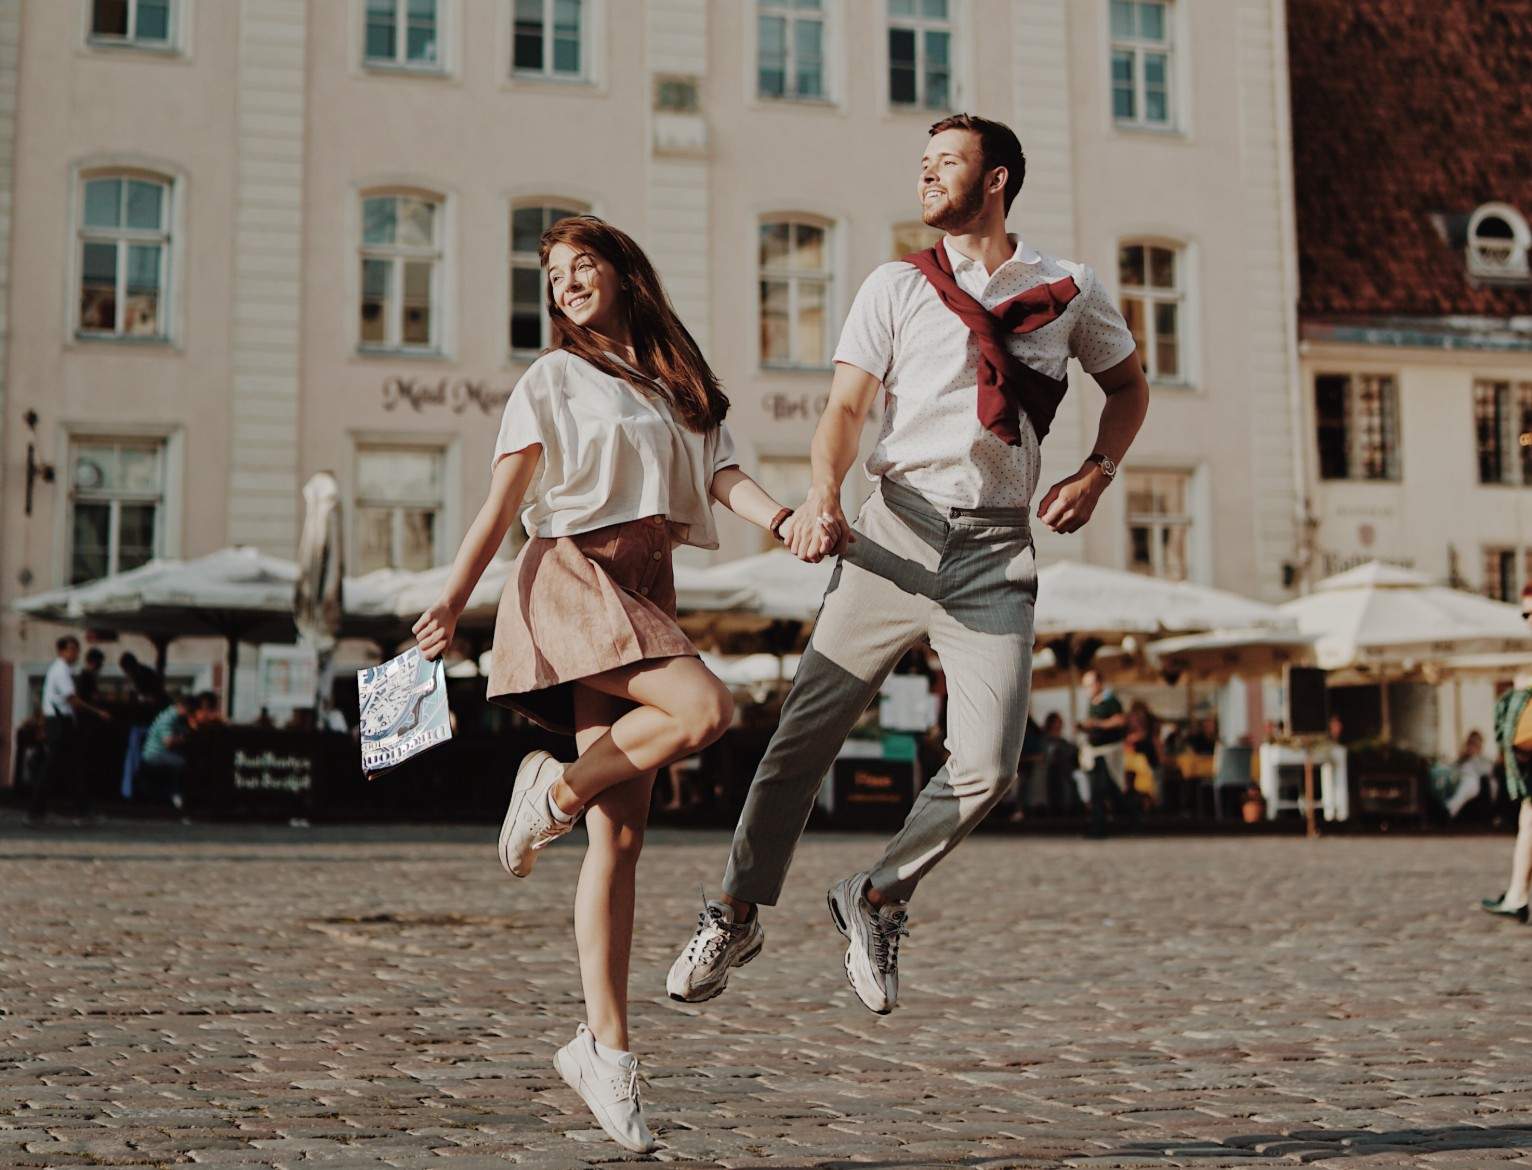 Couple enjoying summer in the Old Town of Tallinn, Estonia Photo: Alexandr Snitovskii